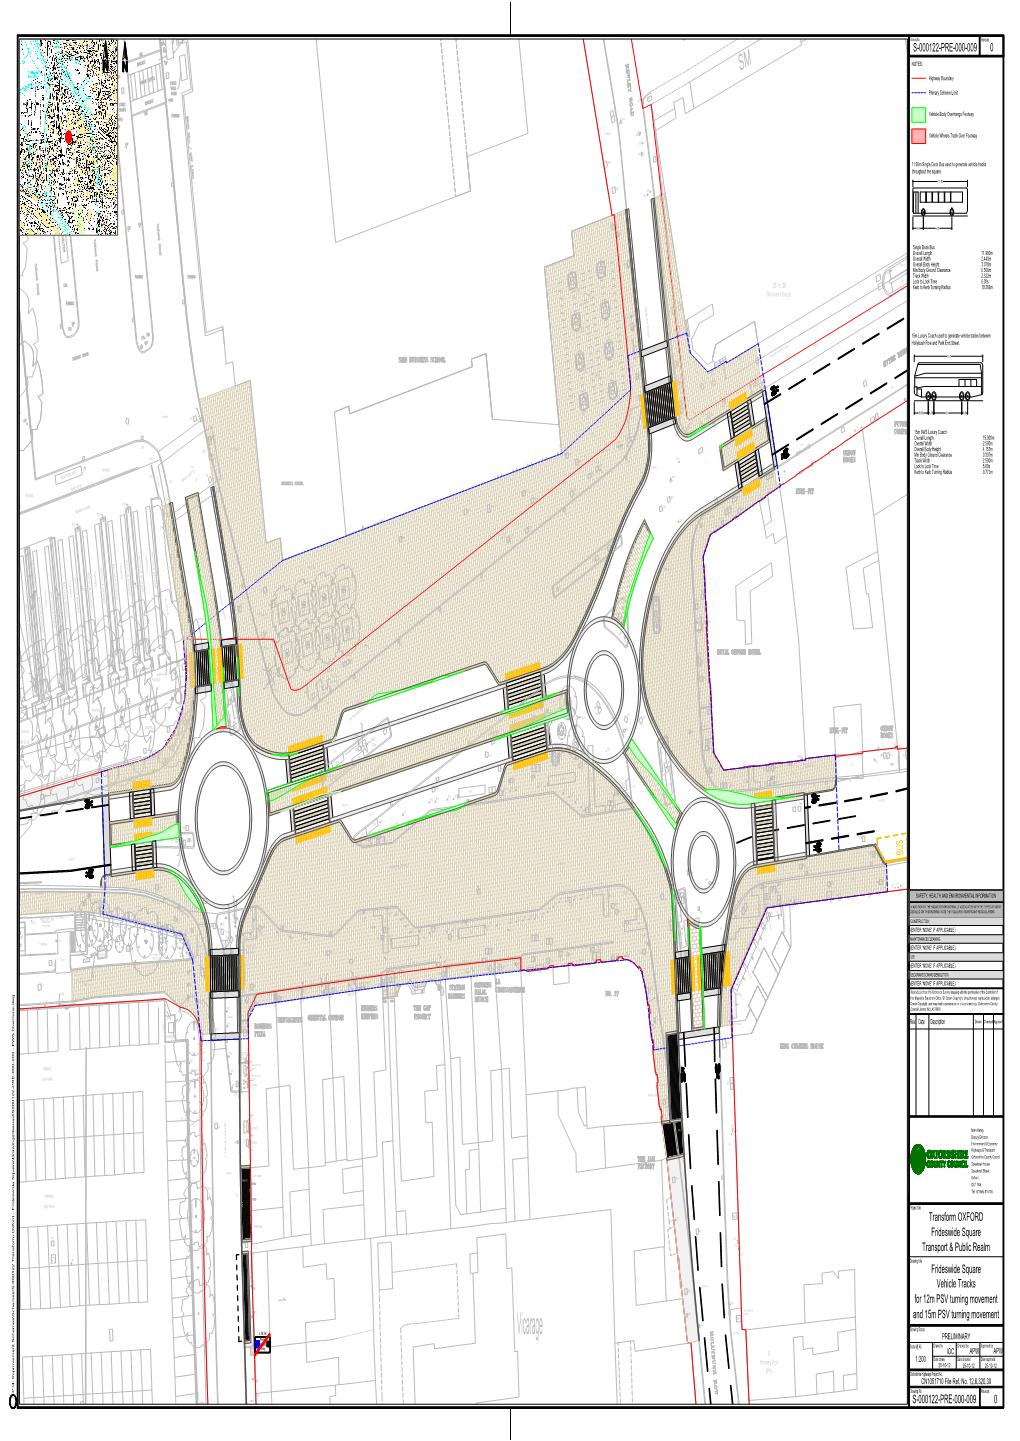 Transform OXFORD Frideswide Square Transport & Public Realm